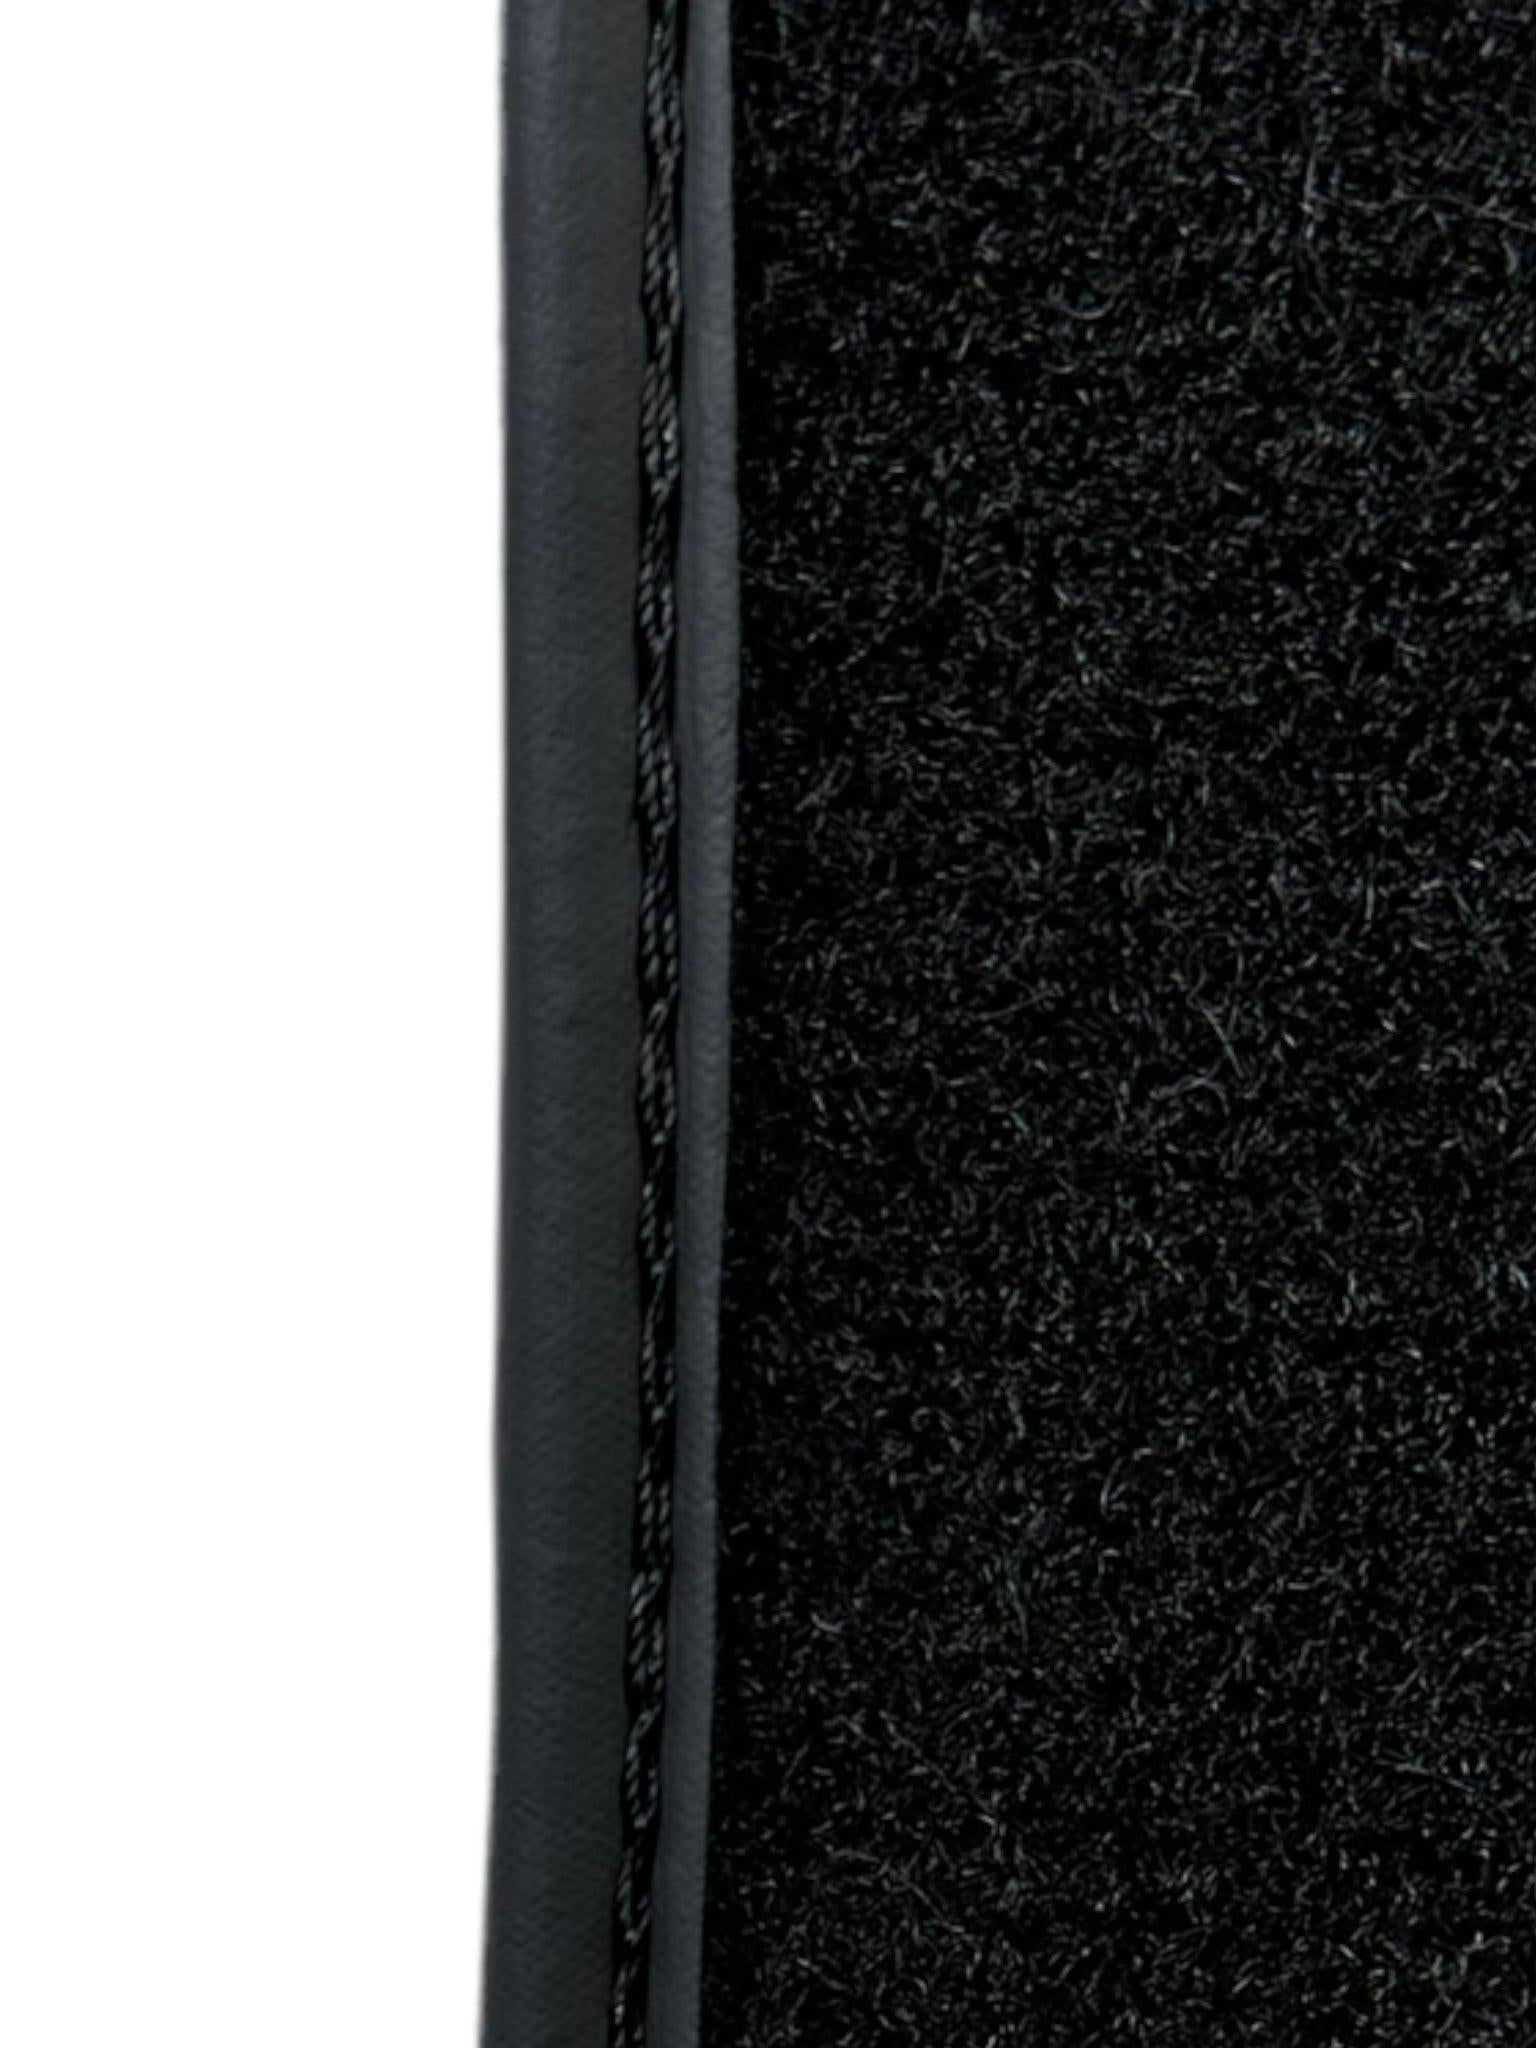 Black Sheepskin Floor Floor Mats For BMW X5 Series F15 ER56 Design